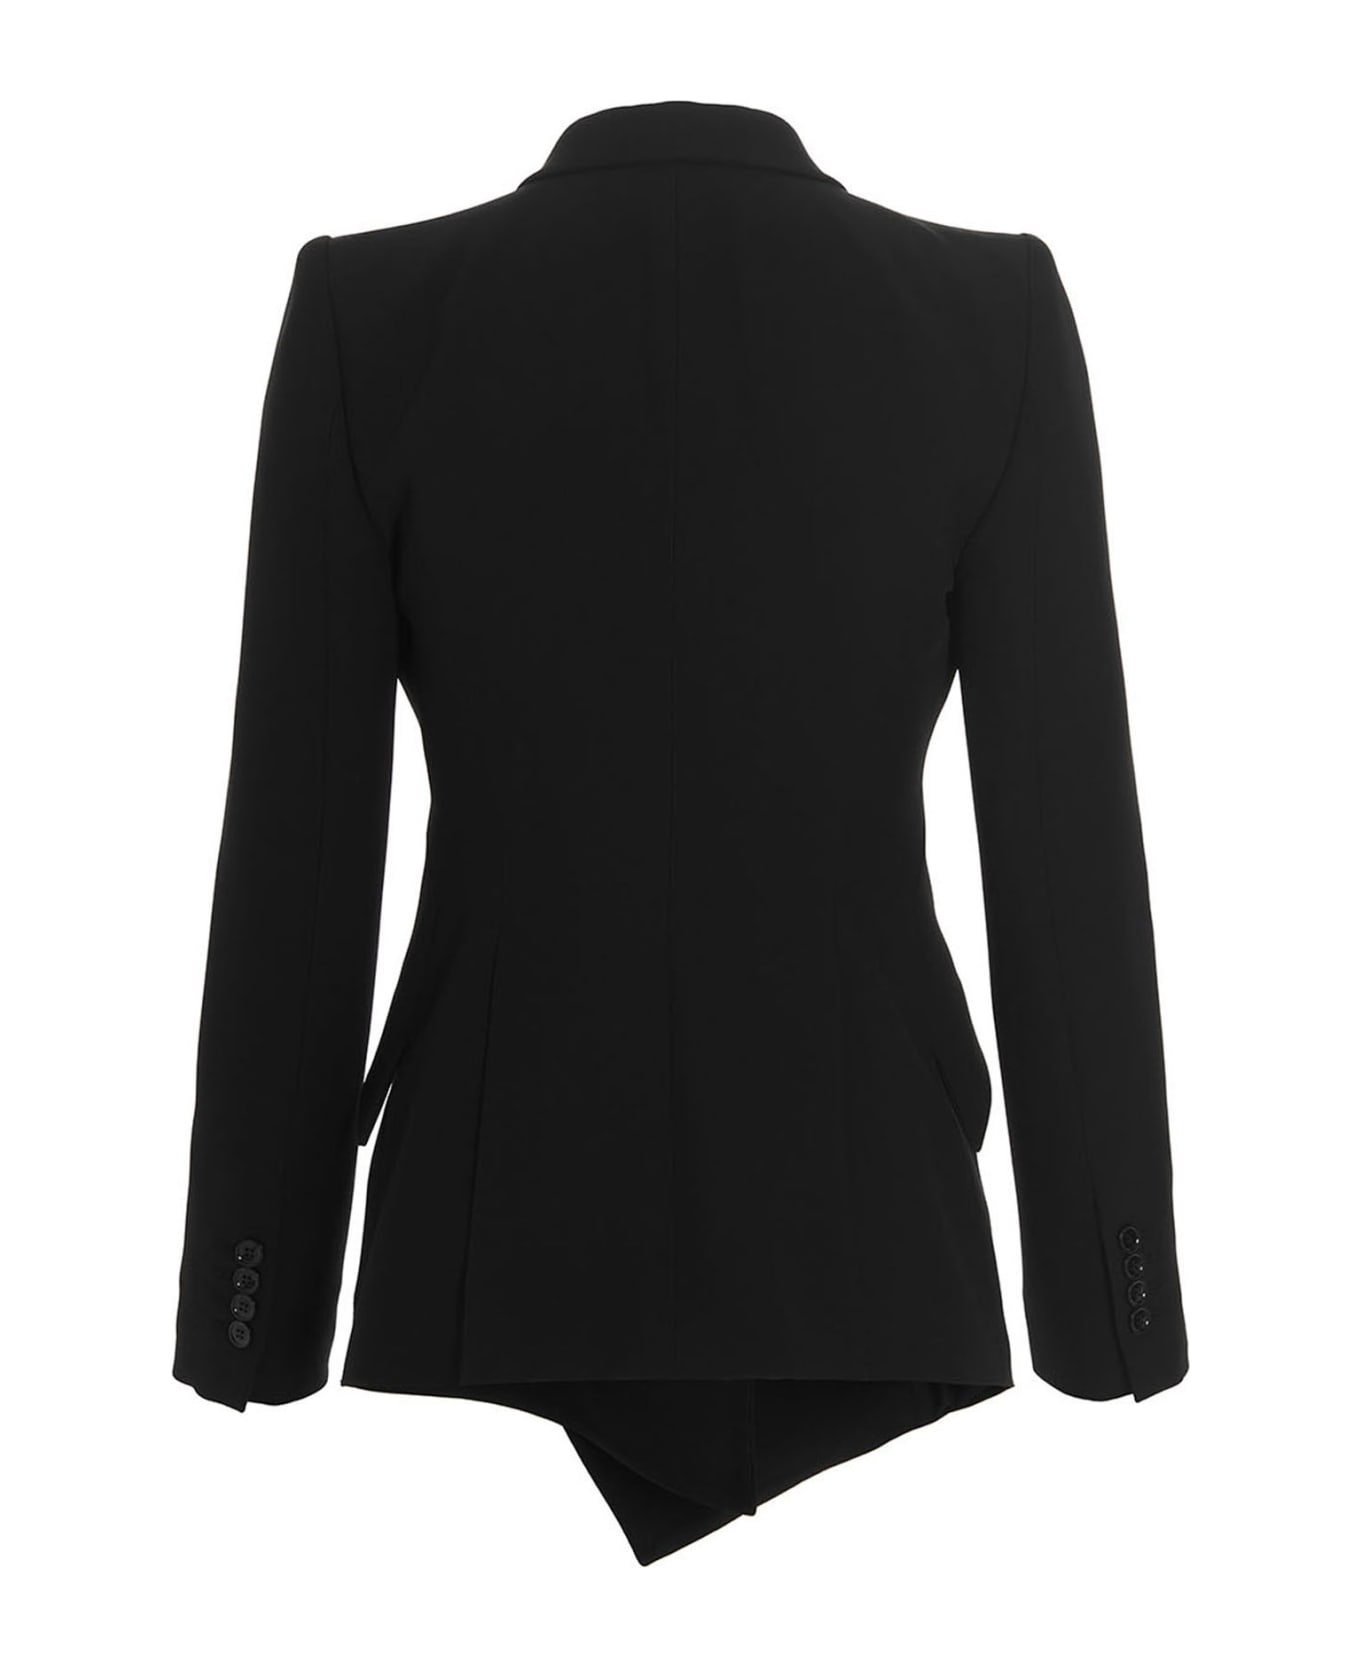 Alexander McQueen Asymmetrical Blazer Jacket - black ブレザー